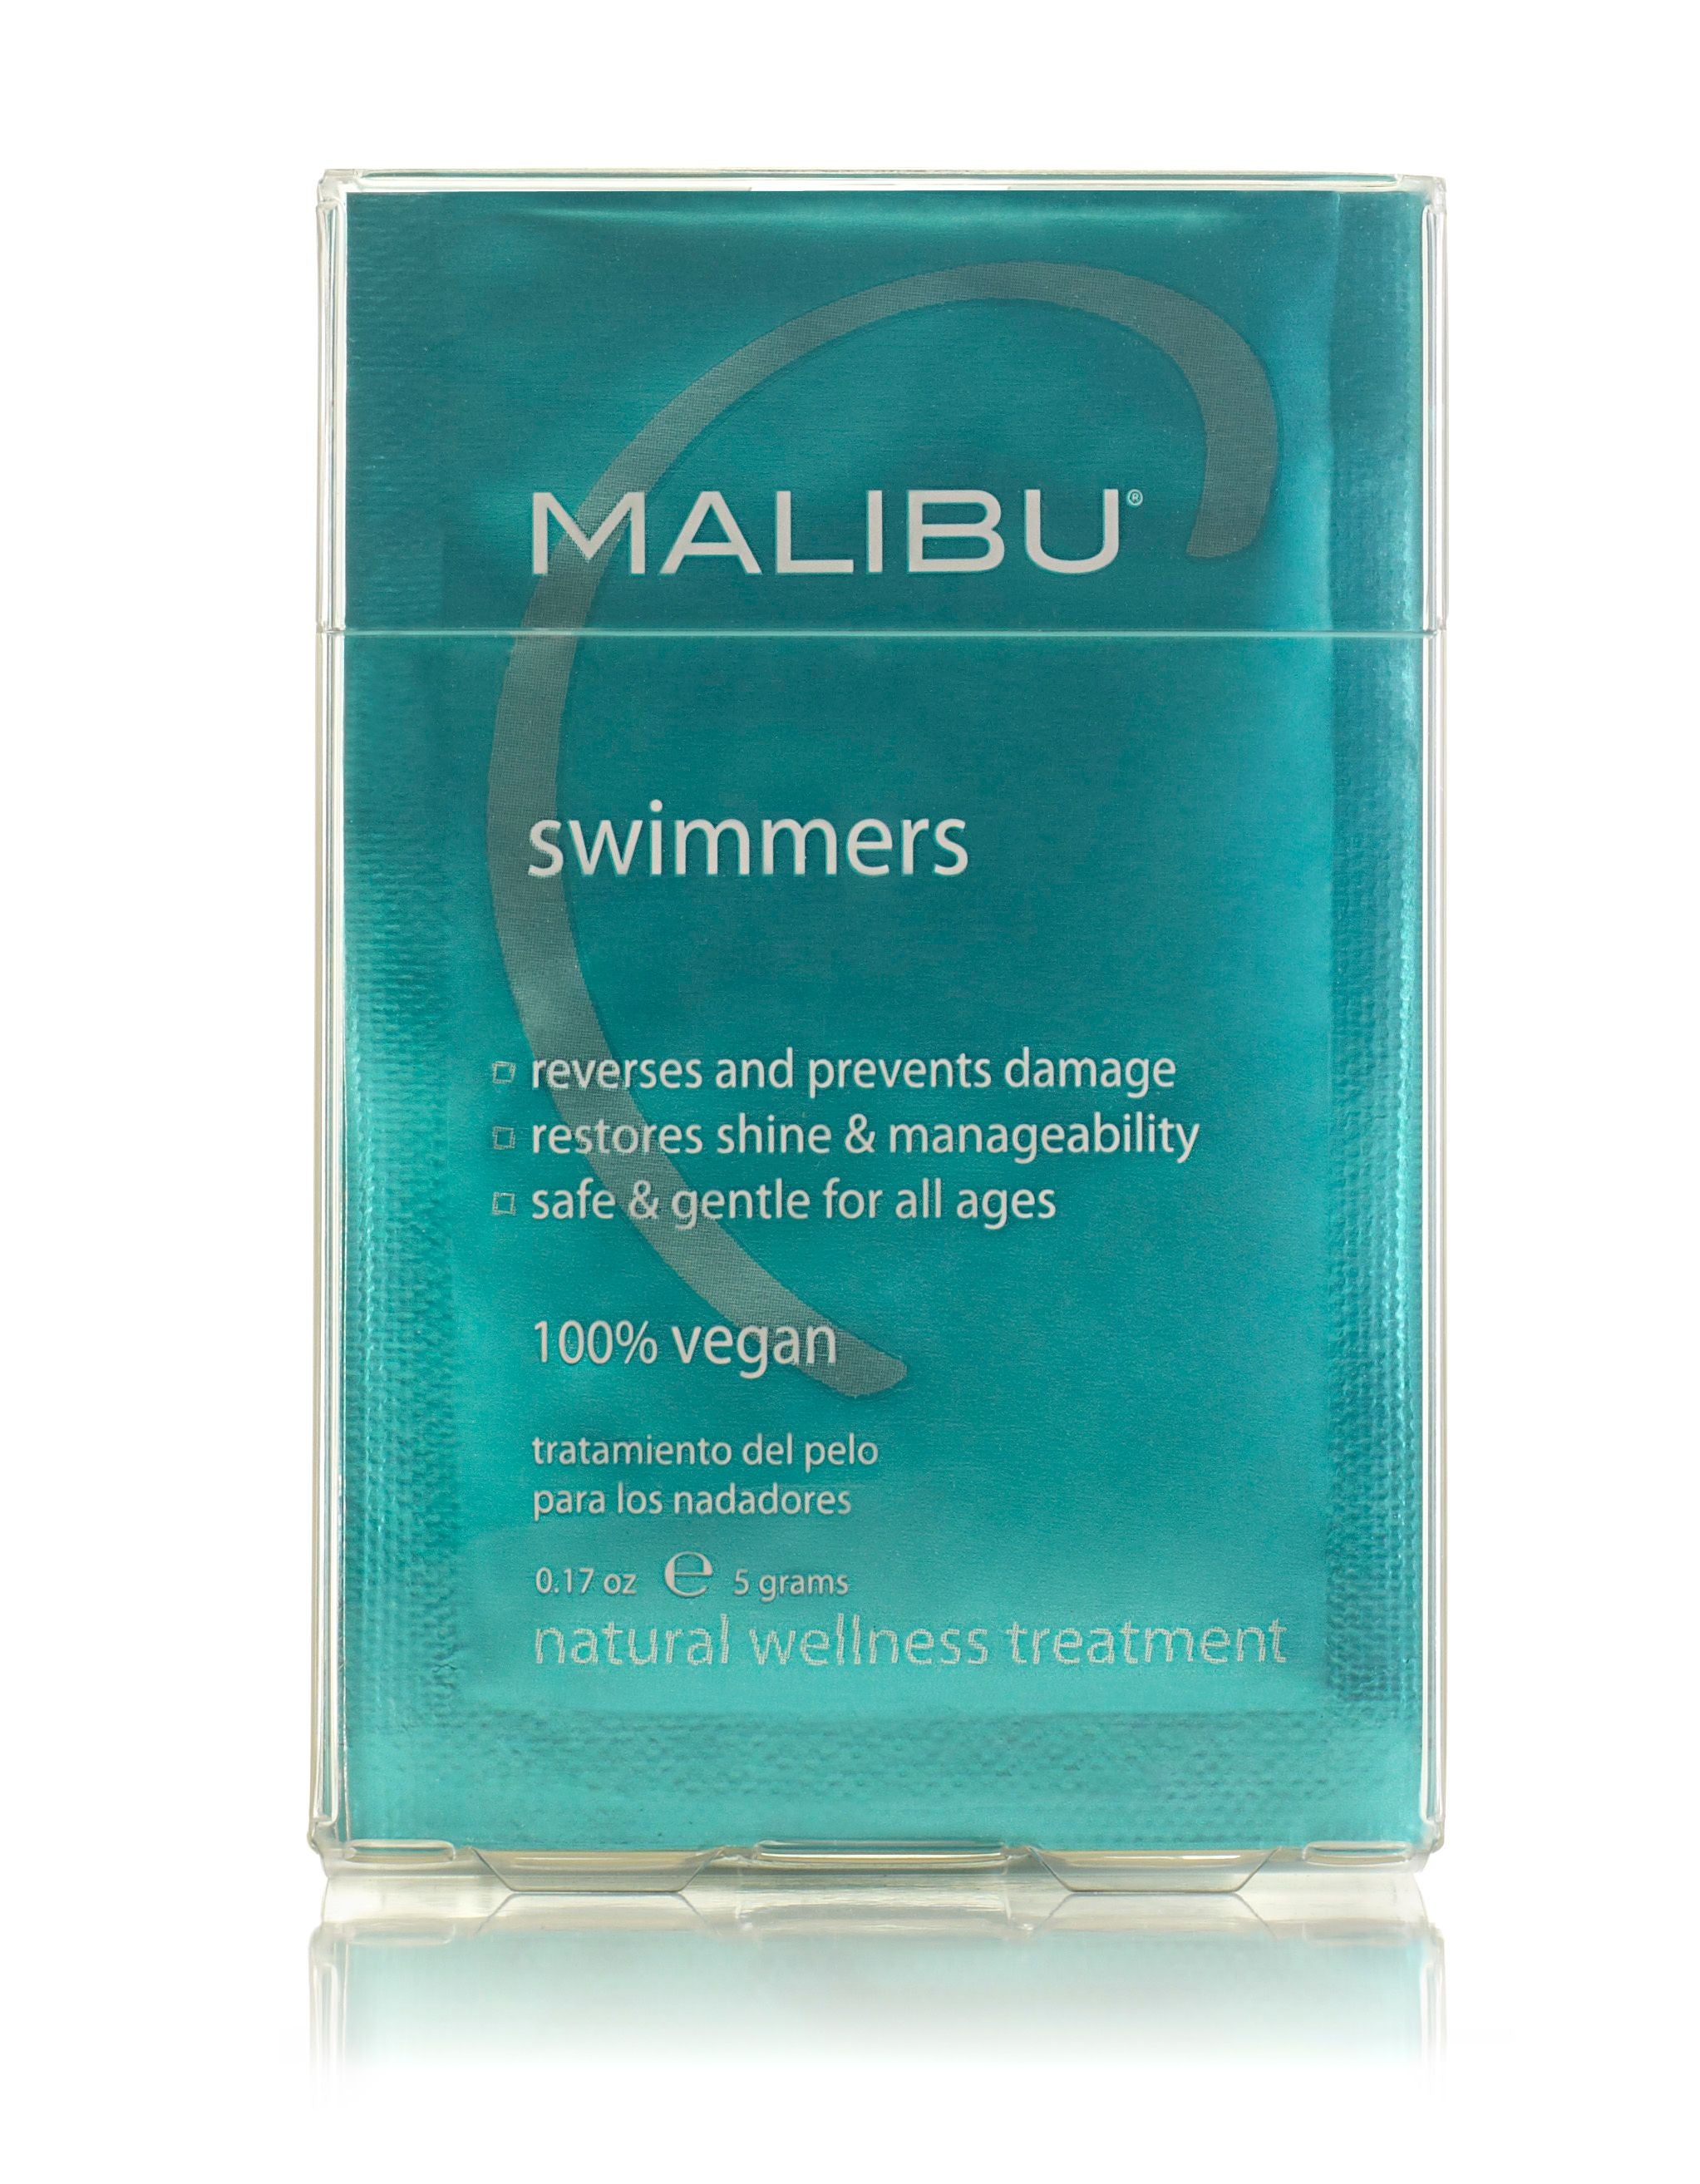 Malibu C Wellness Treatments 12pc - Swimmers